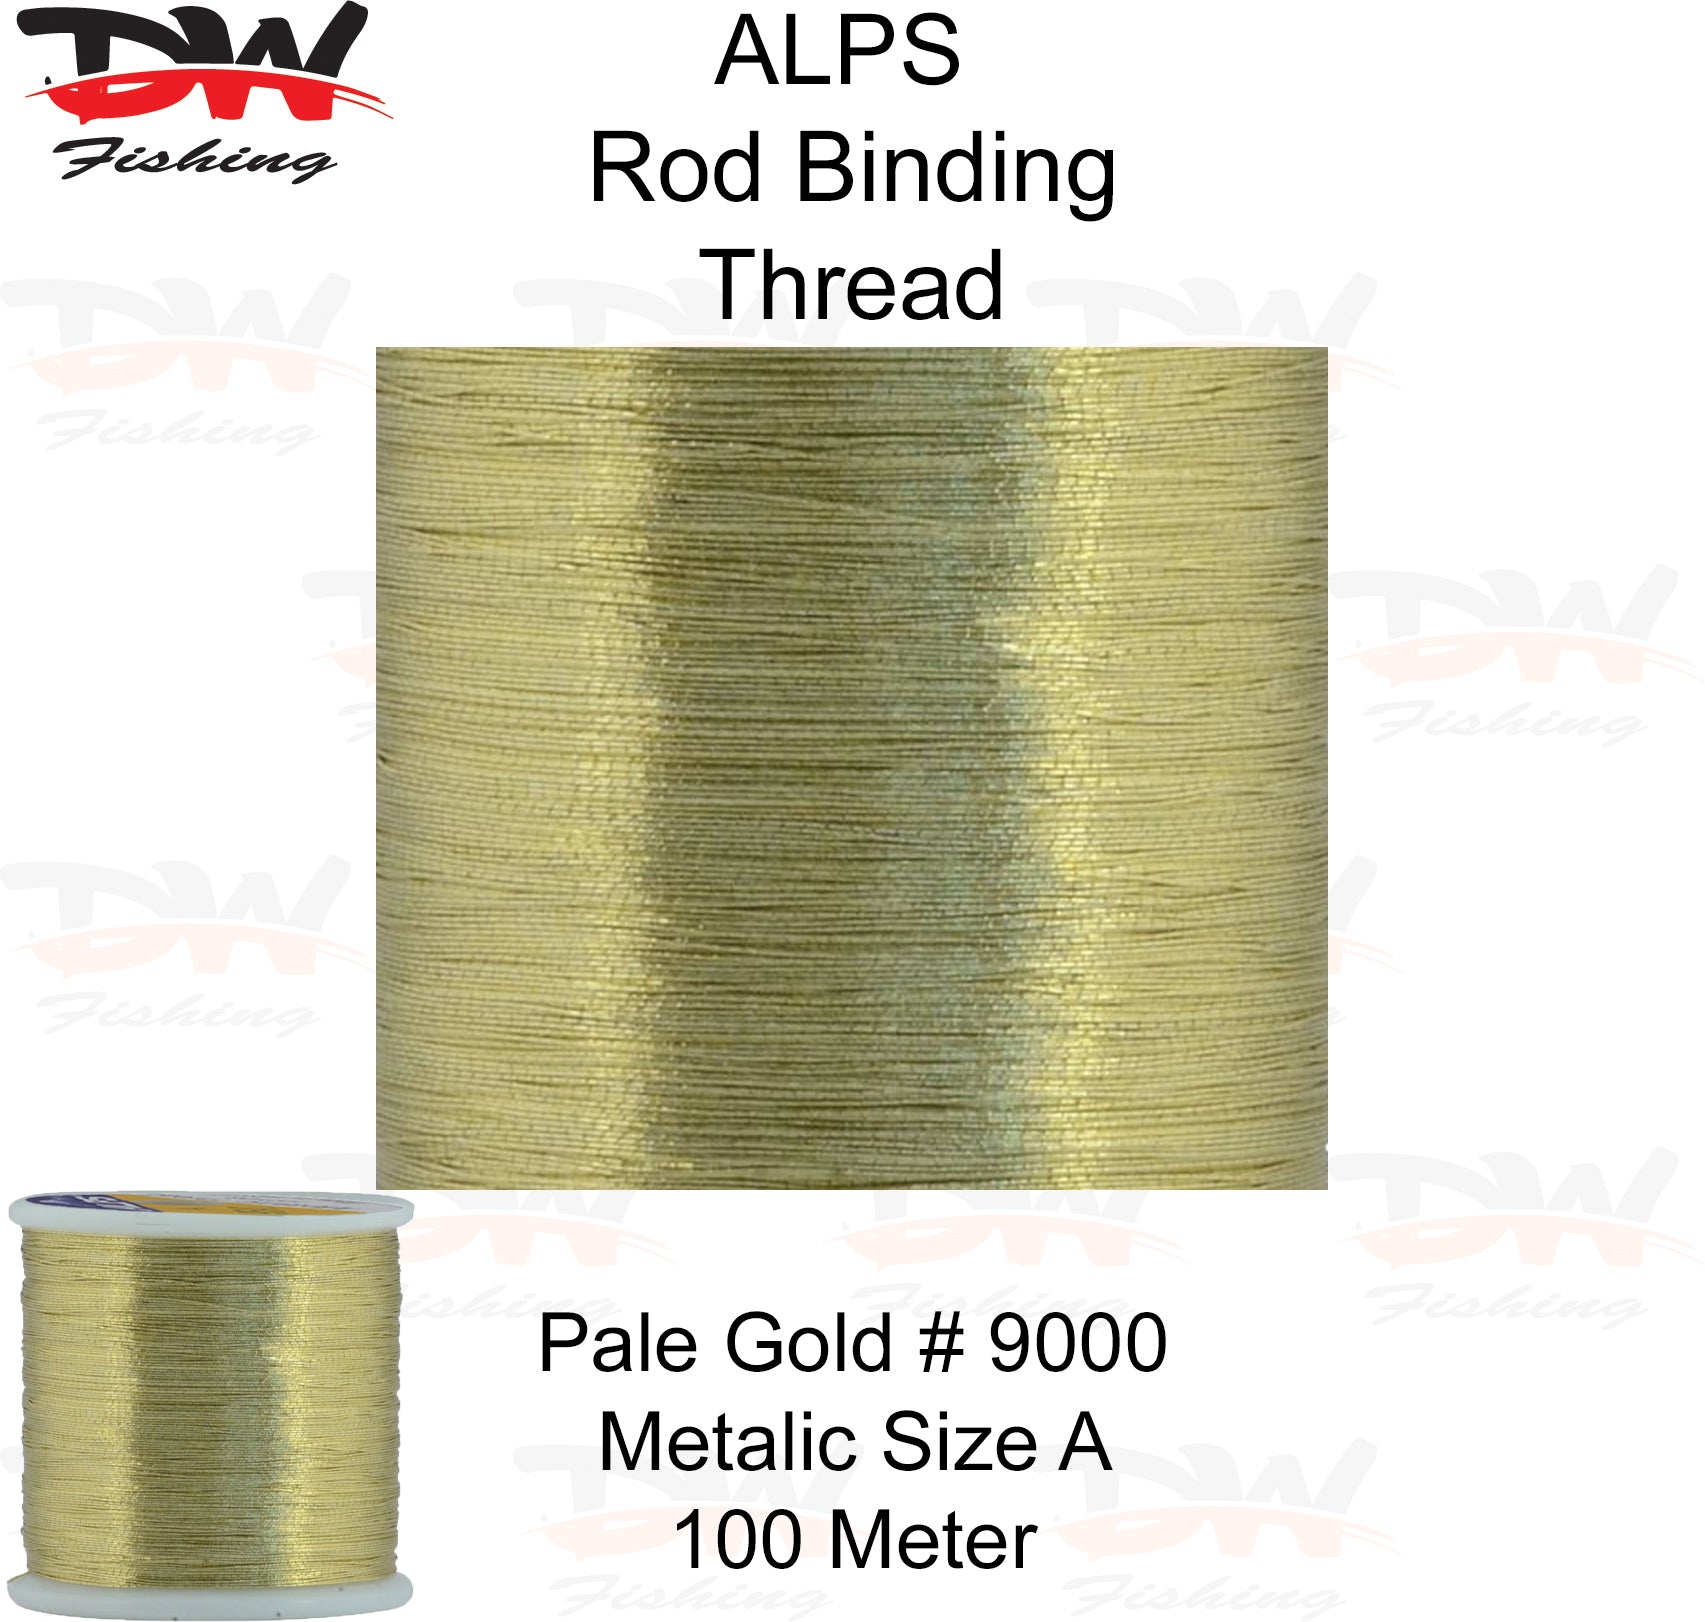 ALPS metalic rod binding thread pale gold